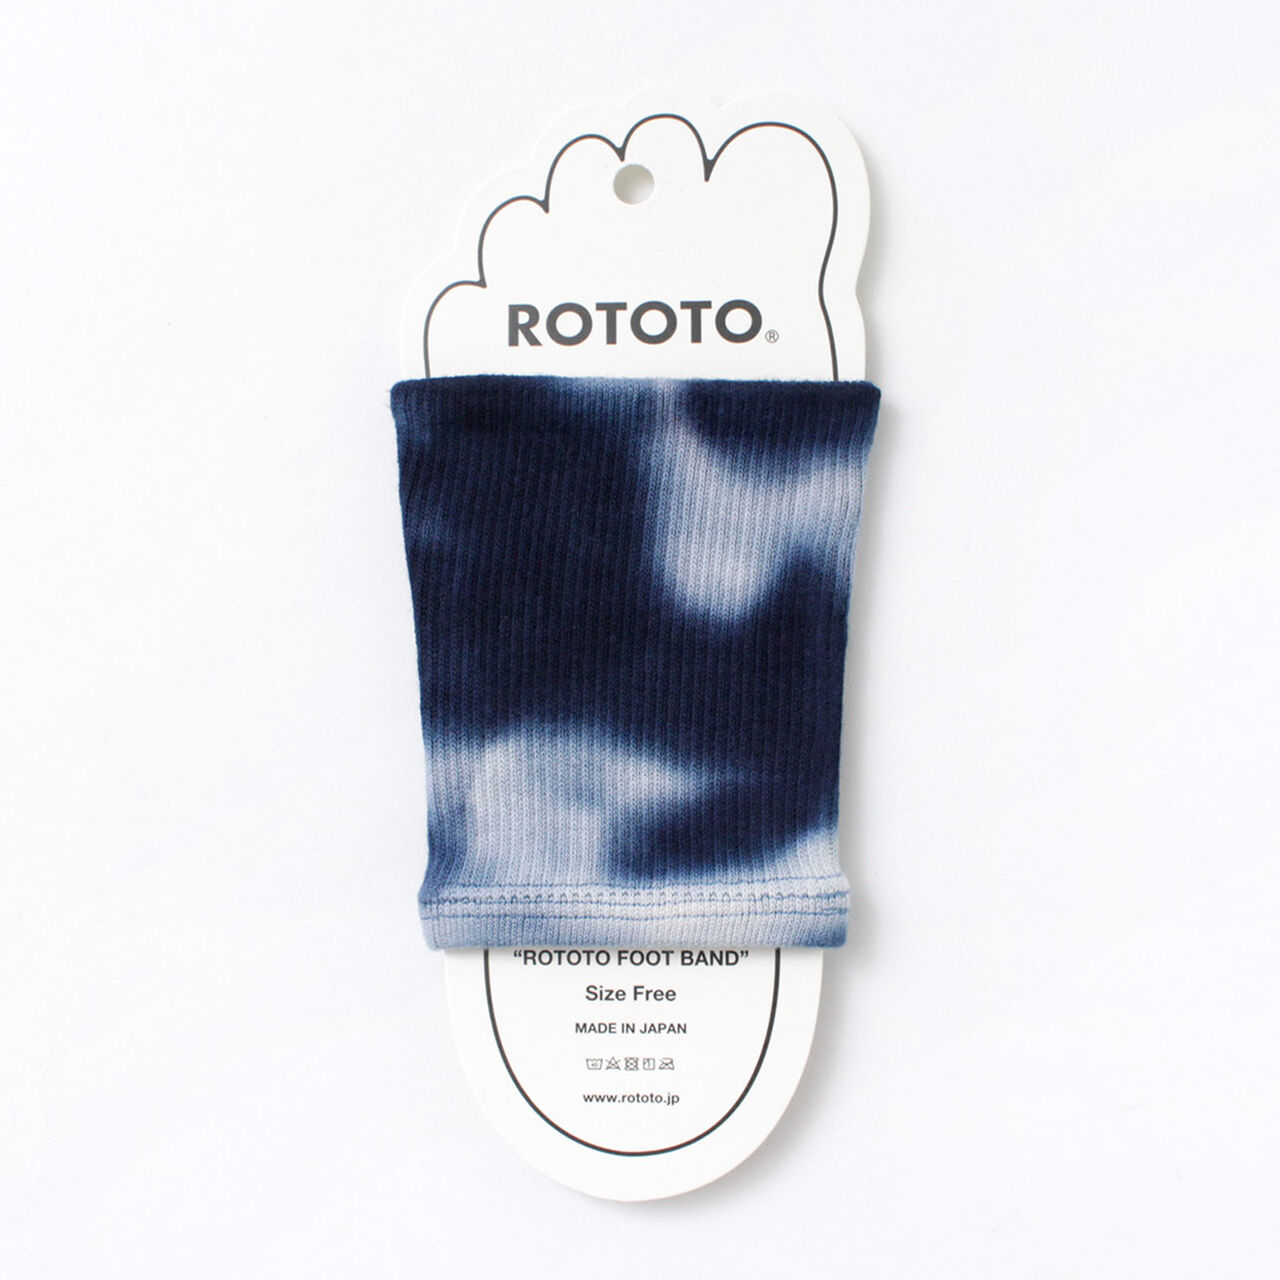 R1314 Foot Band Tie Dye Sandal Socks Socks,Navy_White, large image number 0